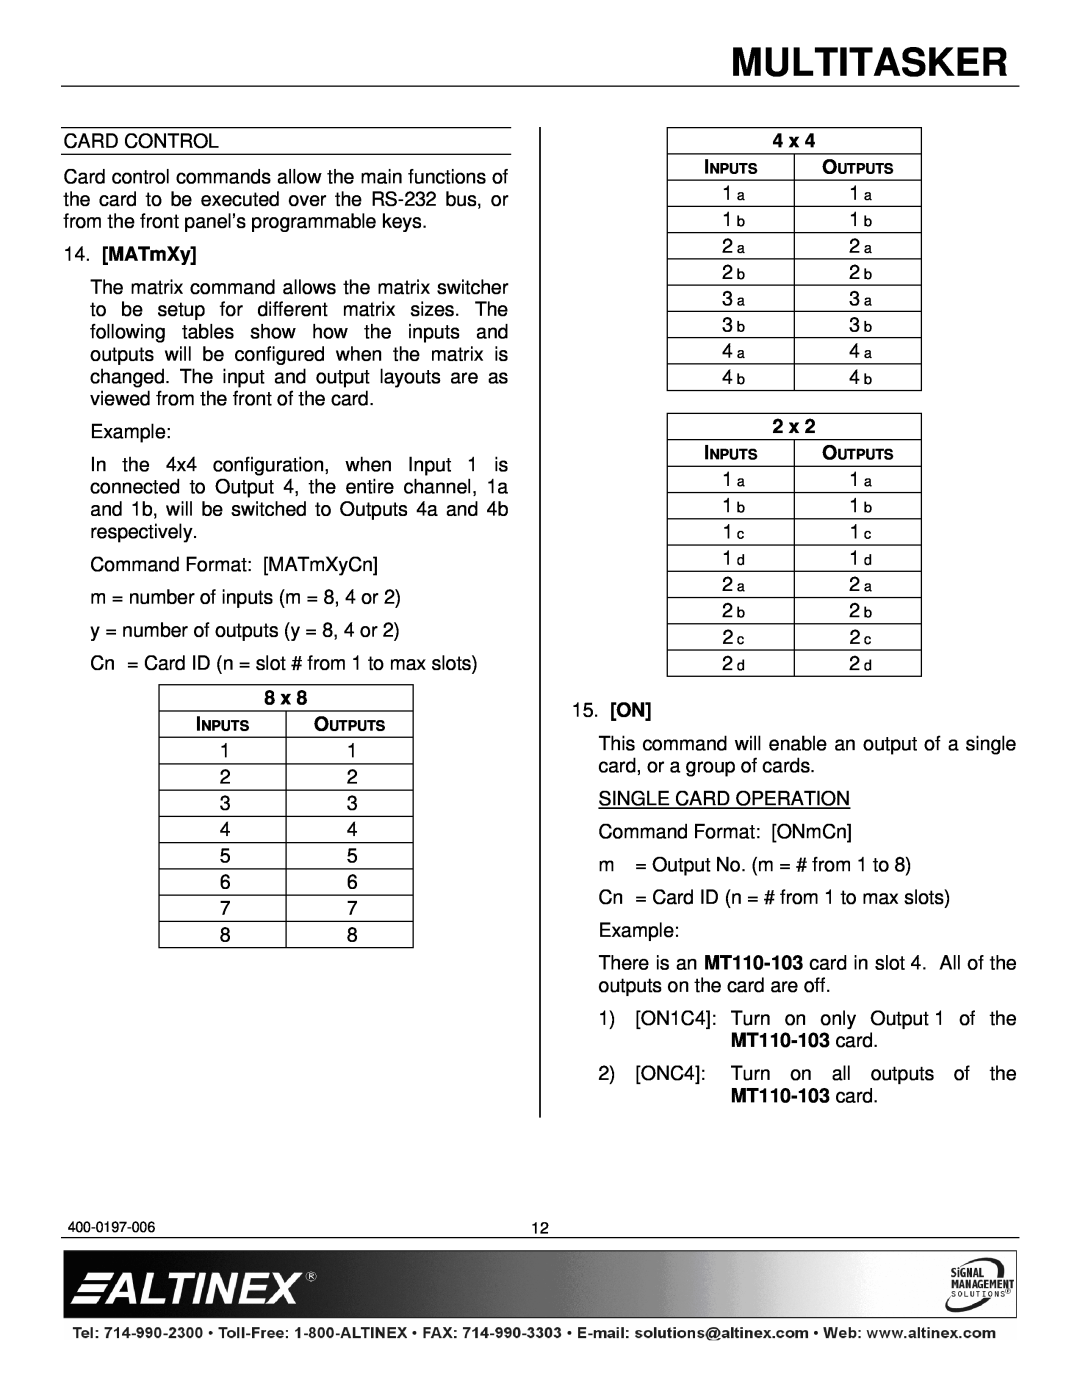 Altinex MT110-103 manual MATmXy, 15. ON, Multitasker, 1 c, 2 c 